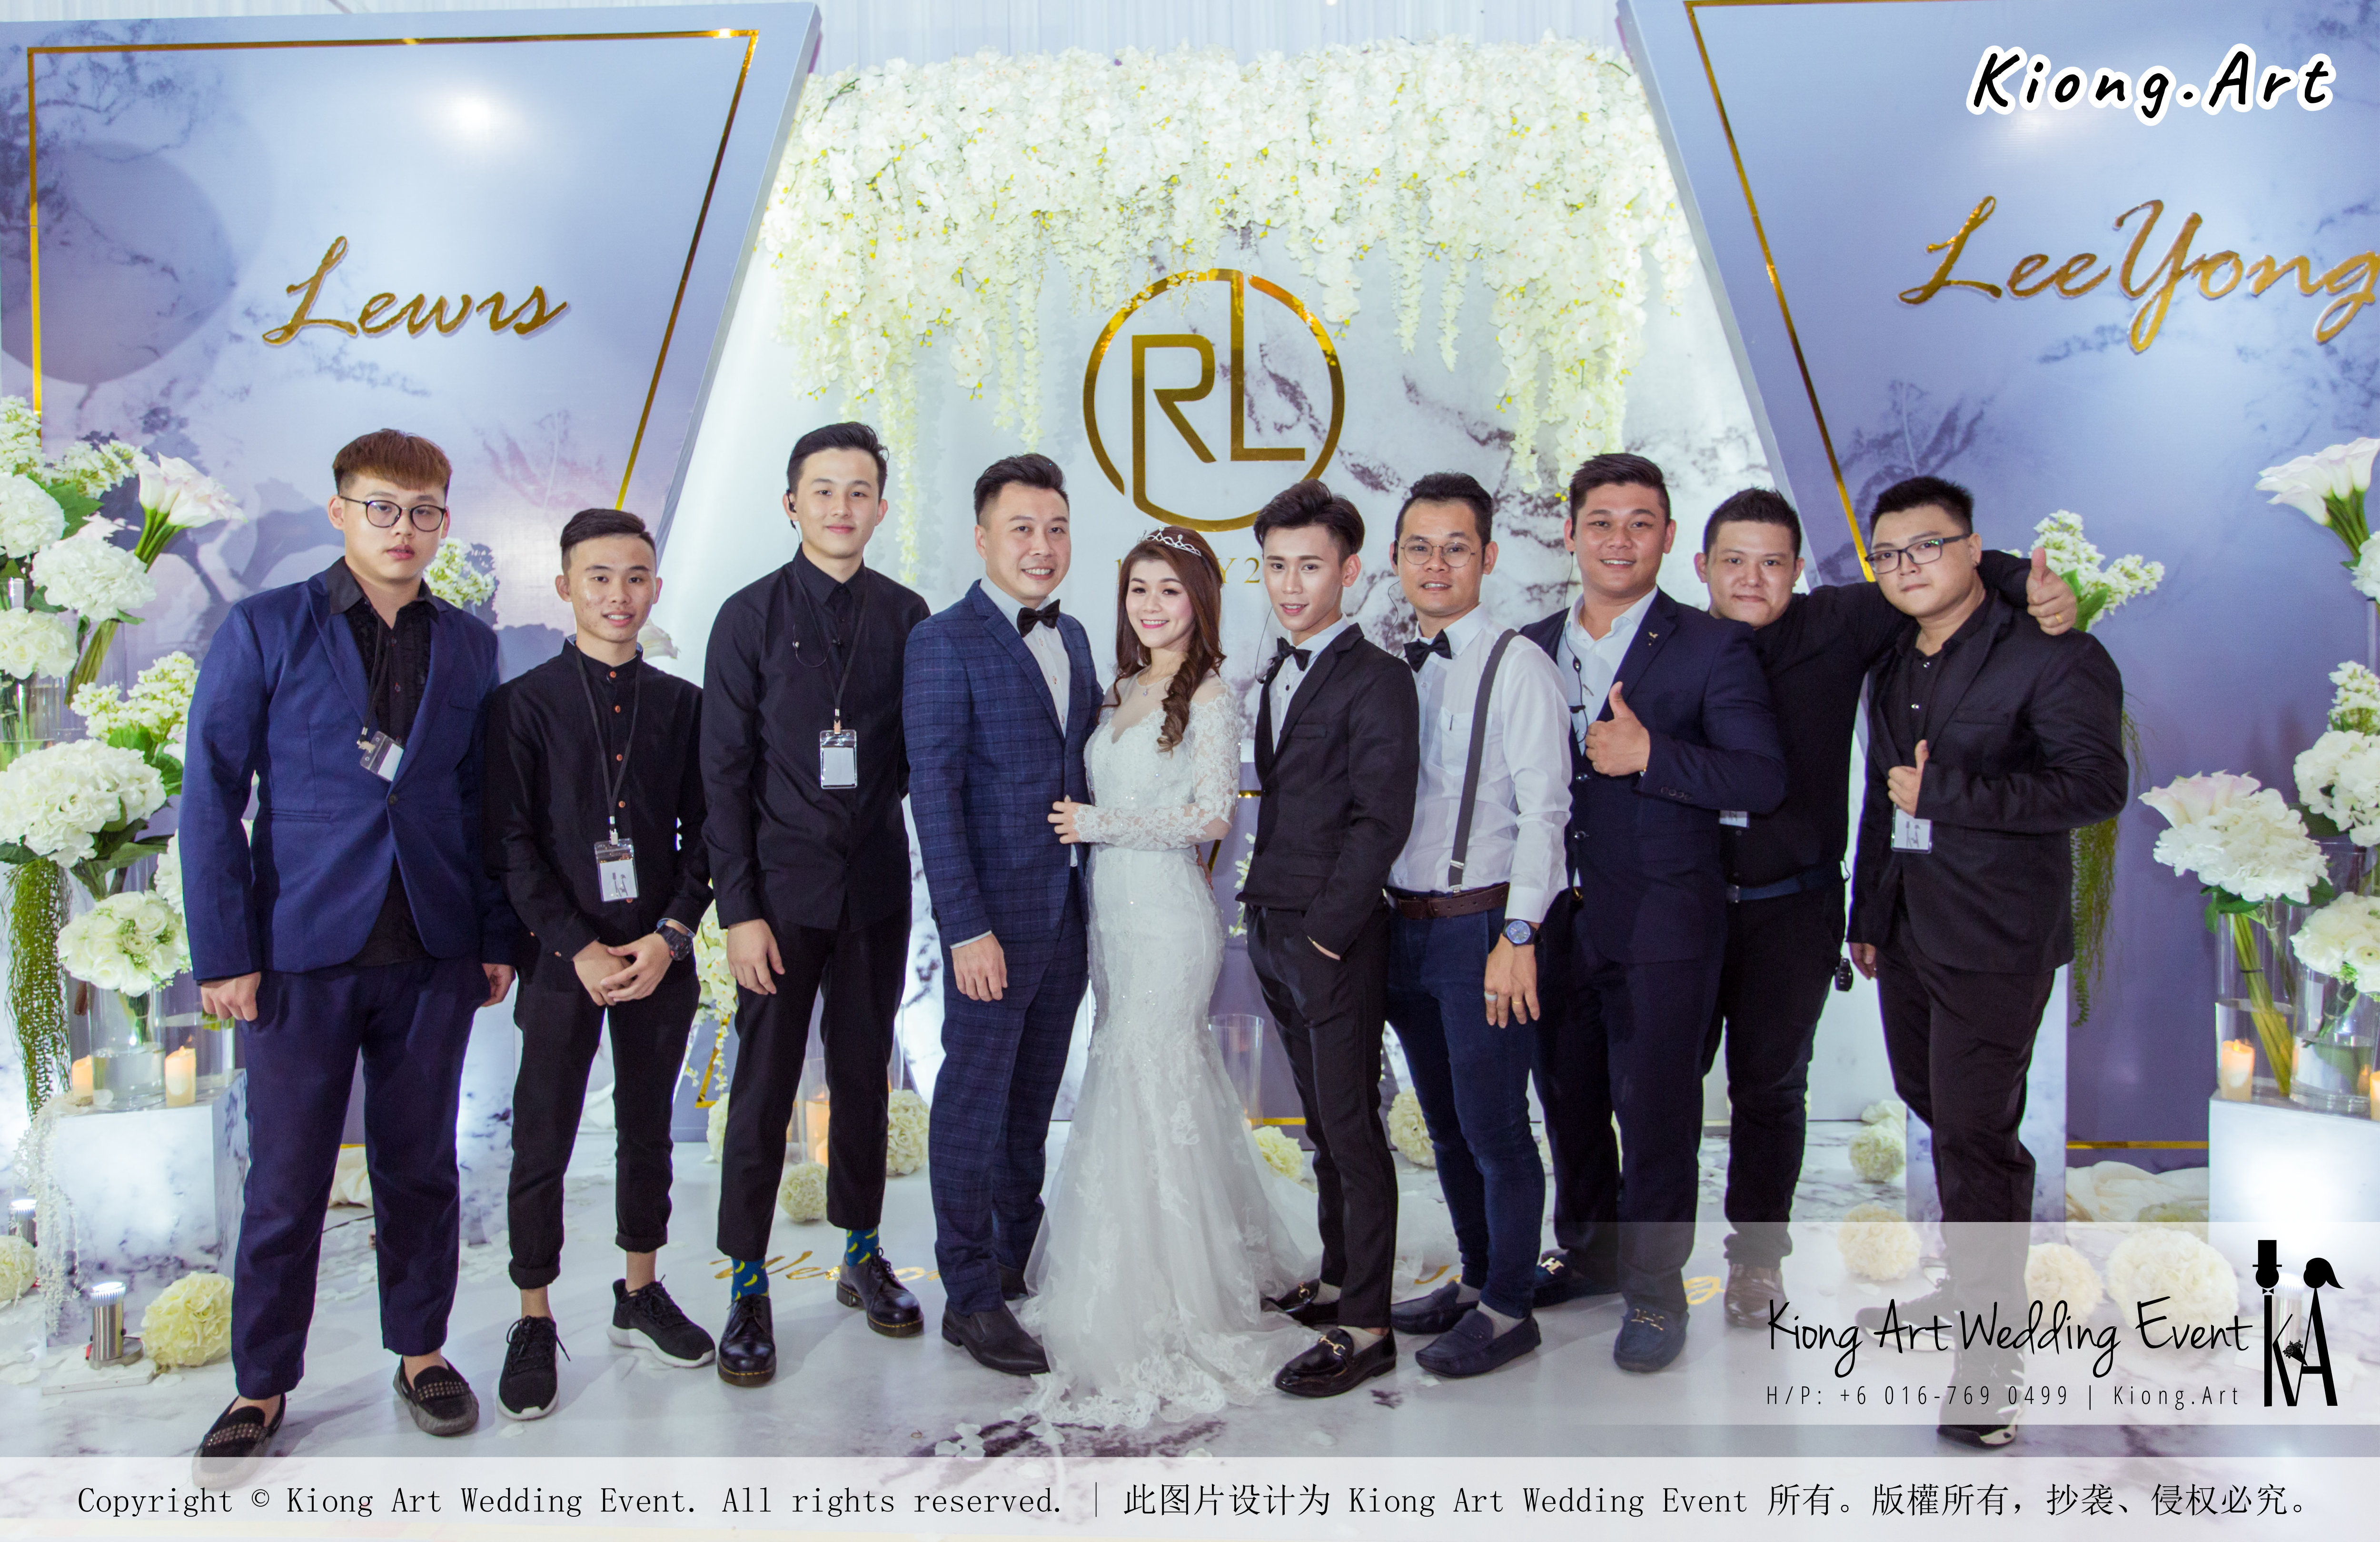 Kiong Art Wedding Event Kuala Lumpur Malaysia Event and Wedding Decoration Company One-stop Wedding Planning Services Wedding Theme Live Band Wedding Photography Videography A03-58